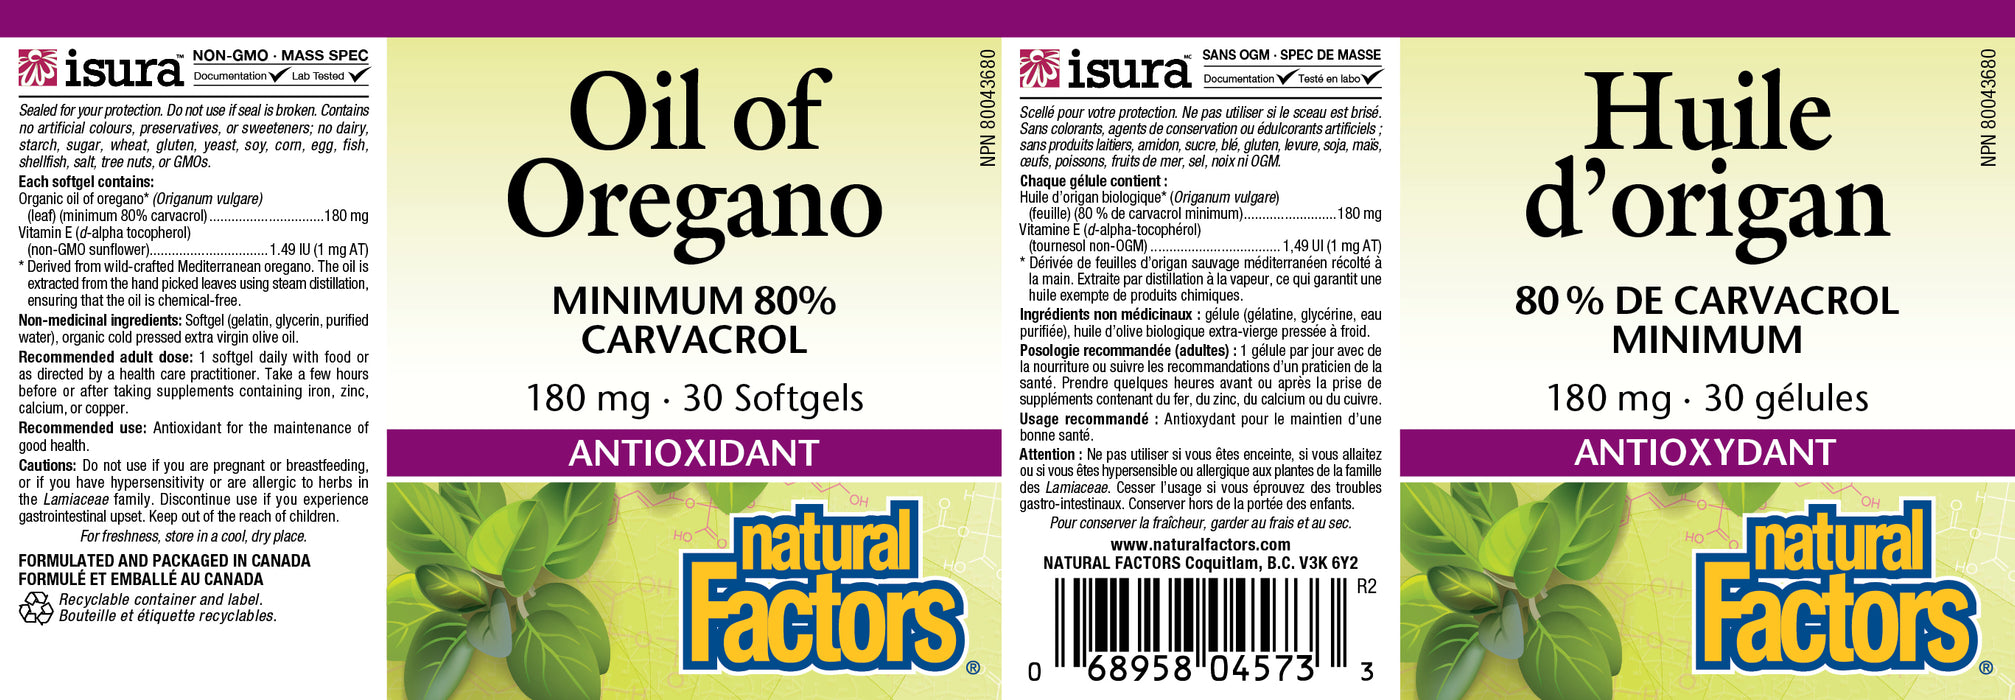 Natural Factors Oil of Oregano 180mg 30 Gelatin Softgels